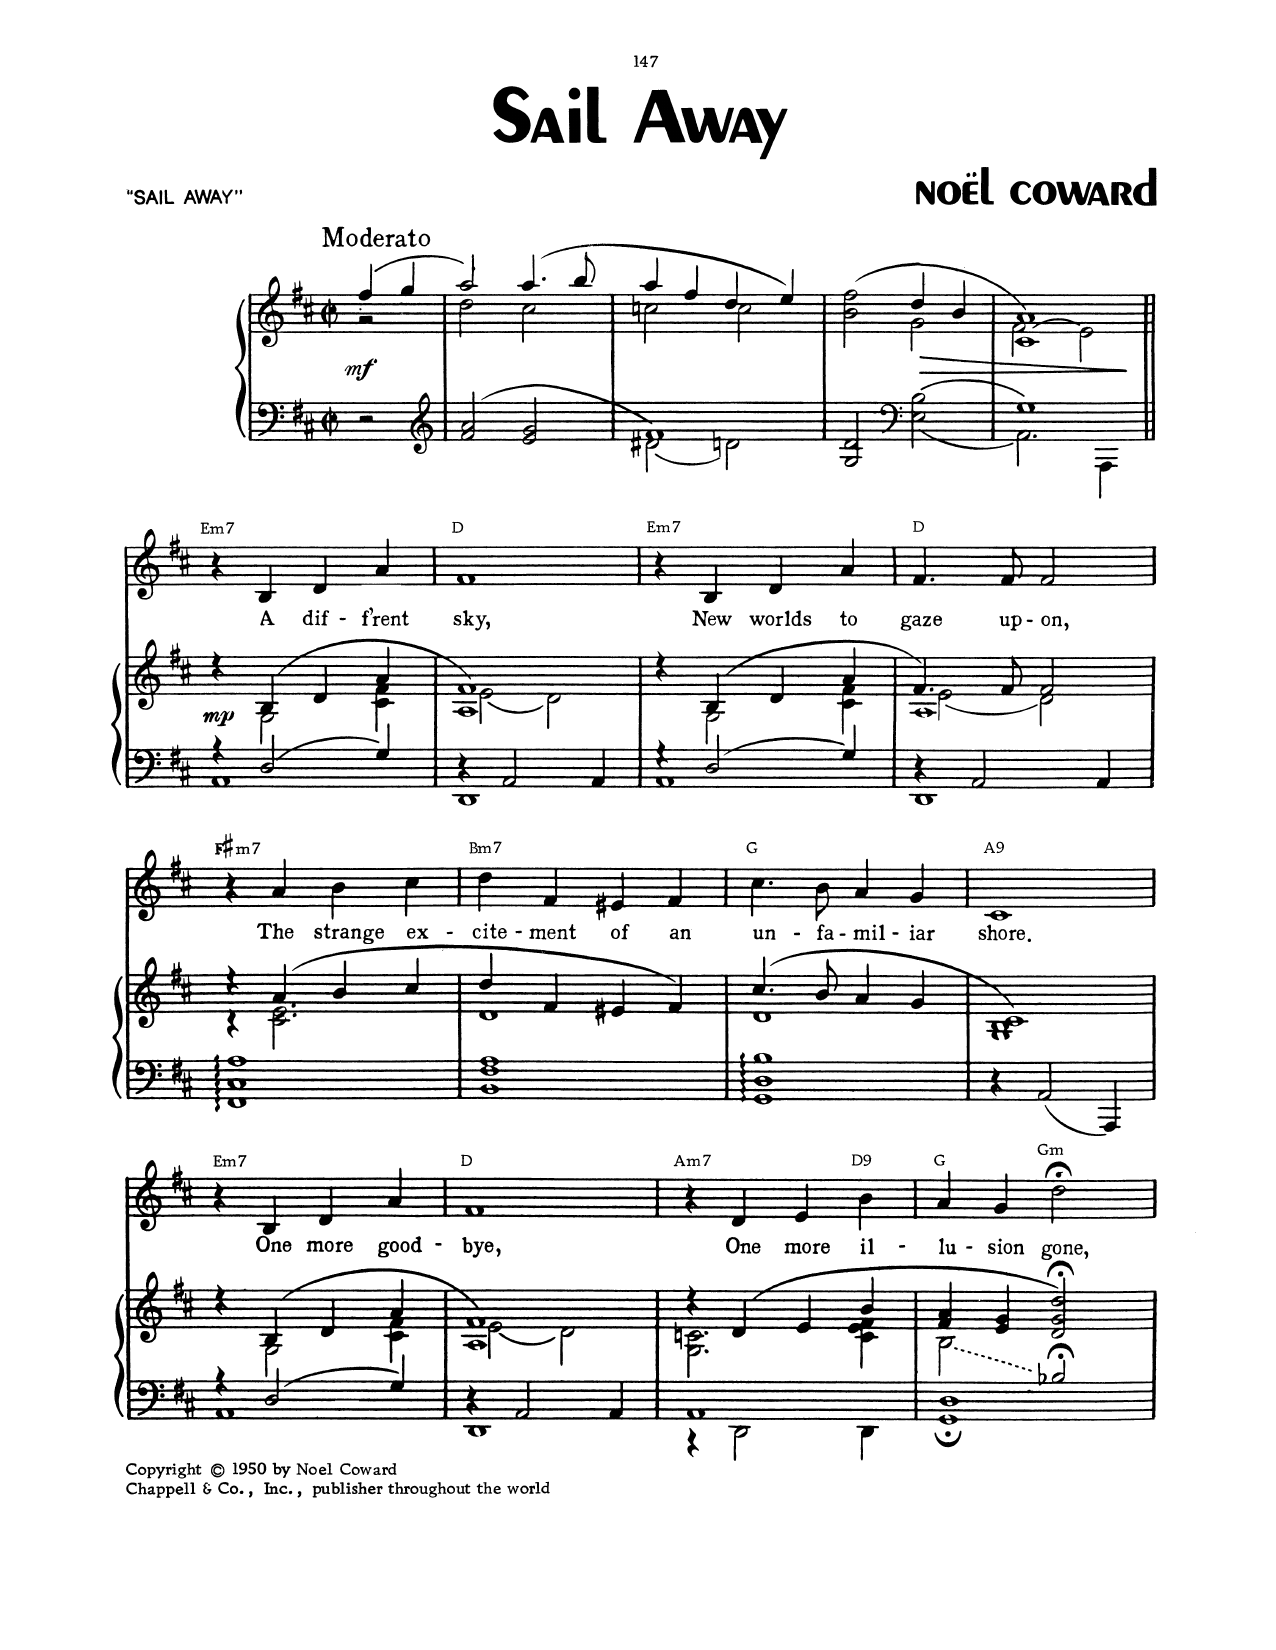 Noel Coward Sail Away Sheet Music Notes & Chords for Piano, Vocal & Guitar (Right-Hand Melody) - Download or Print PDF